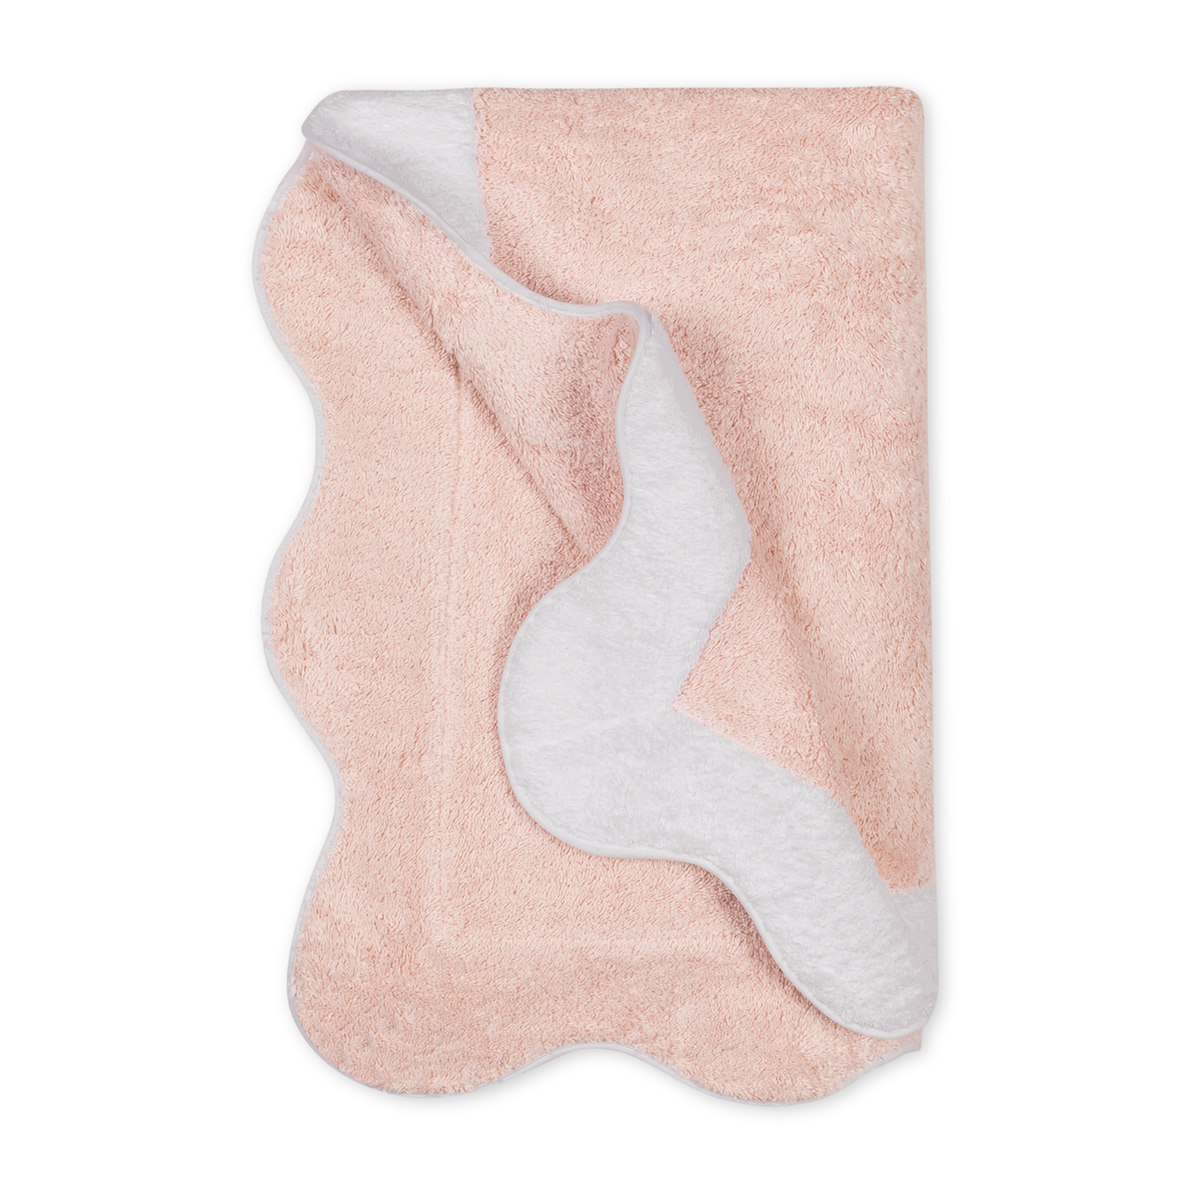 Folded Matouk Neptune Beach Towels in Blush/White Color